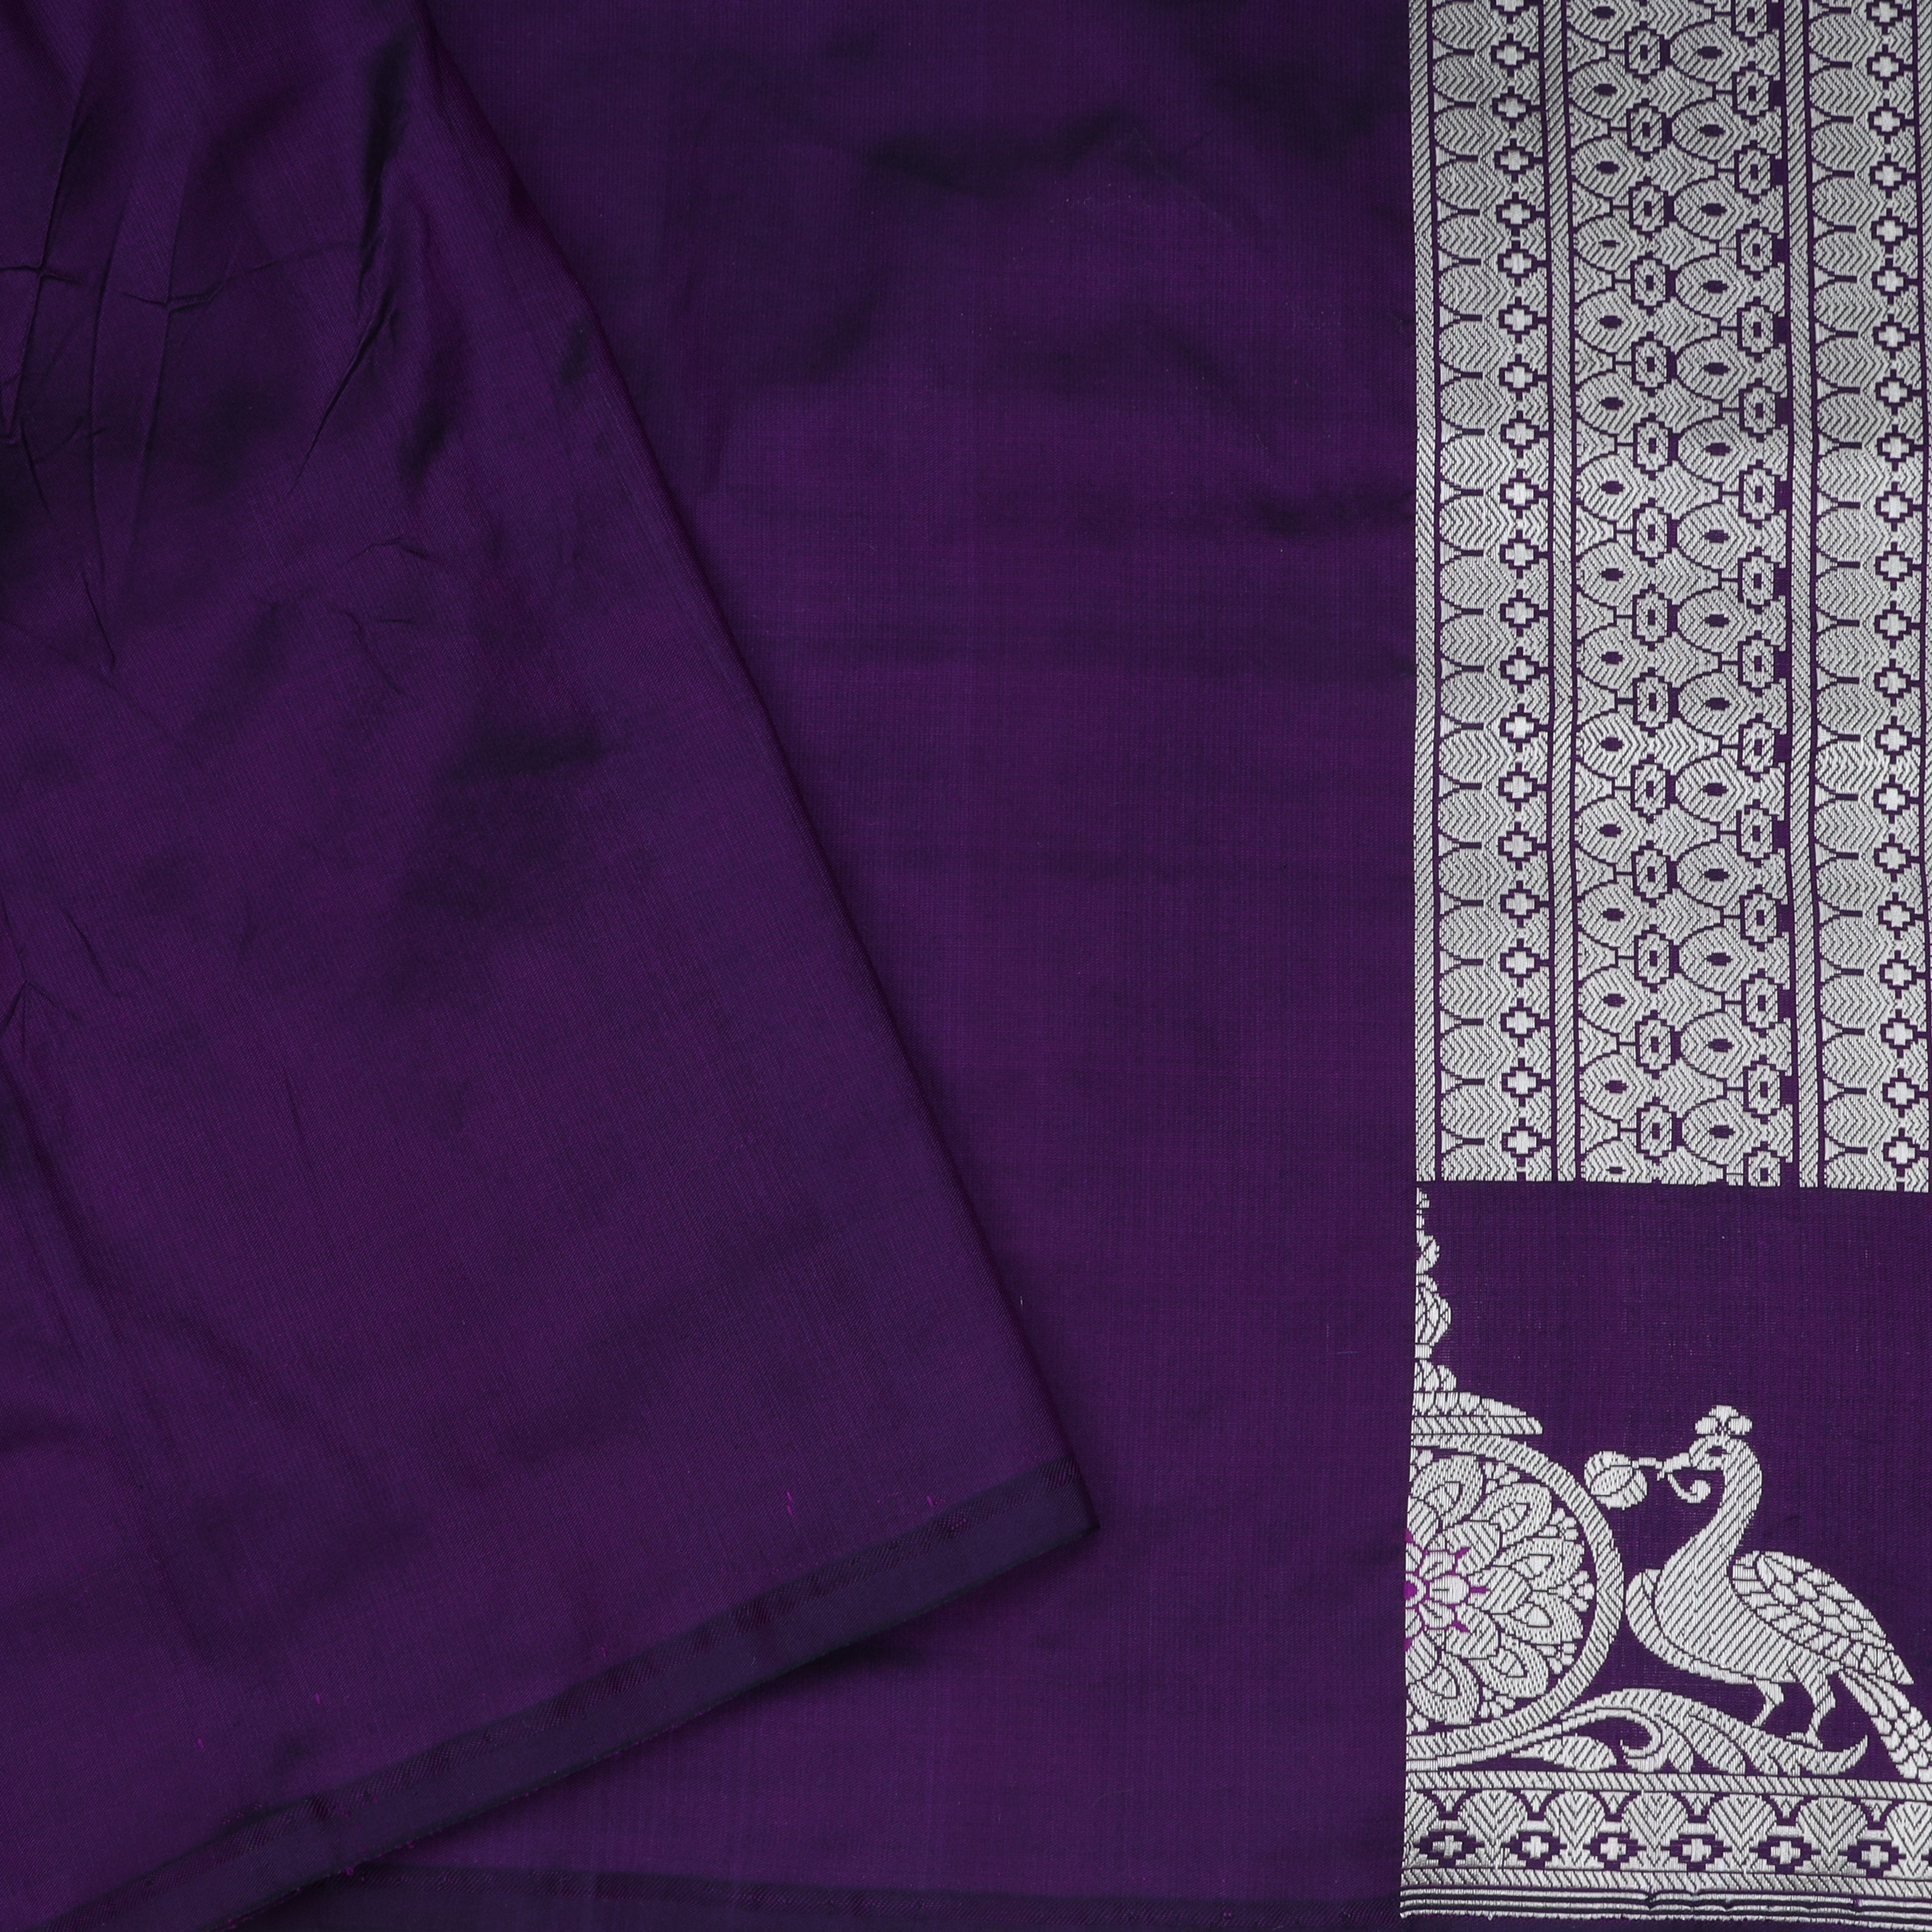 Dark Violet Banarasi Silk Handloom Saree With Floral Motif Pattern